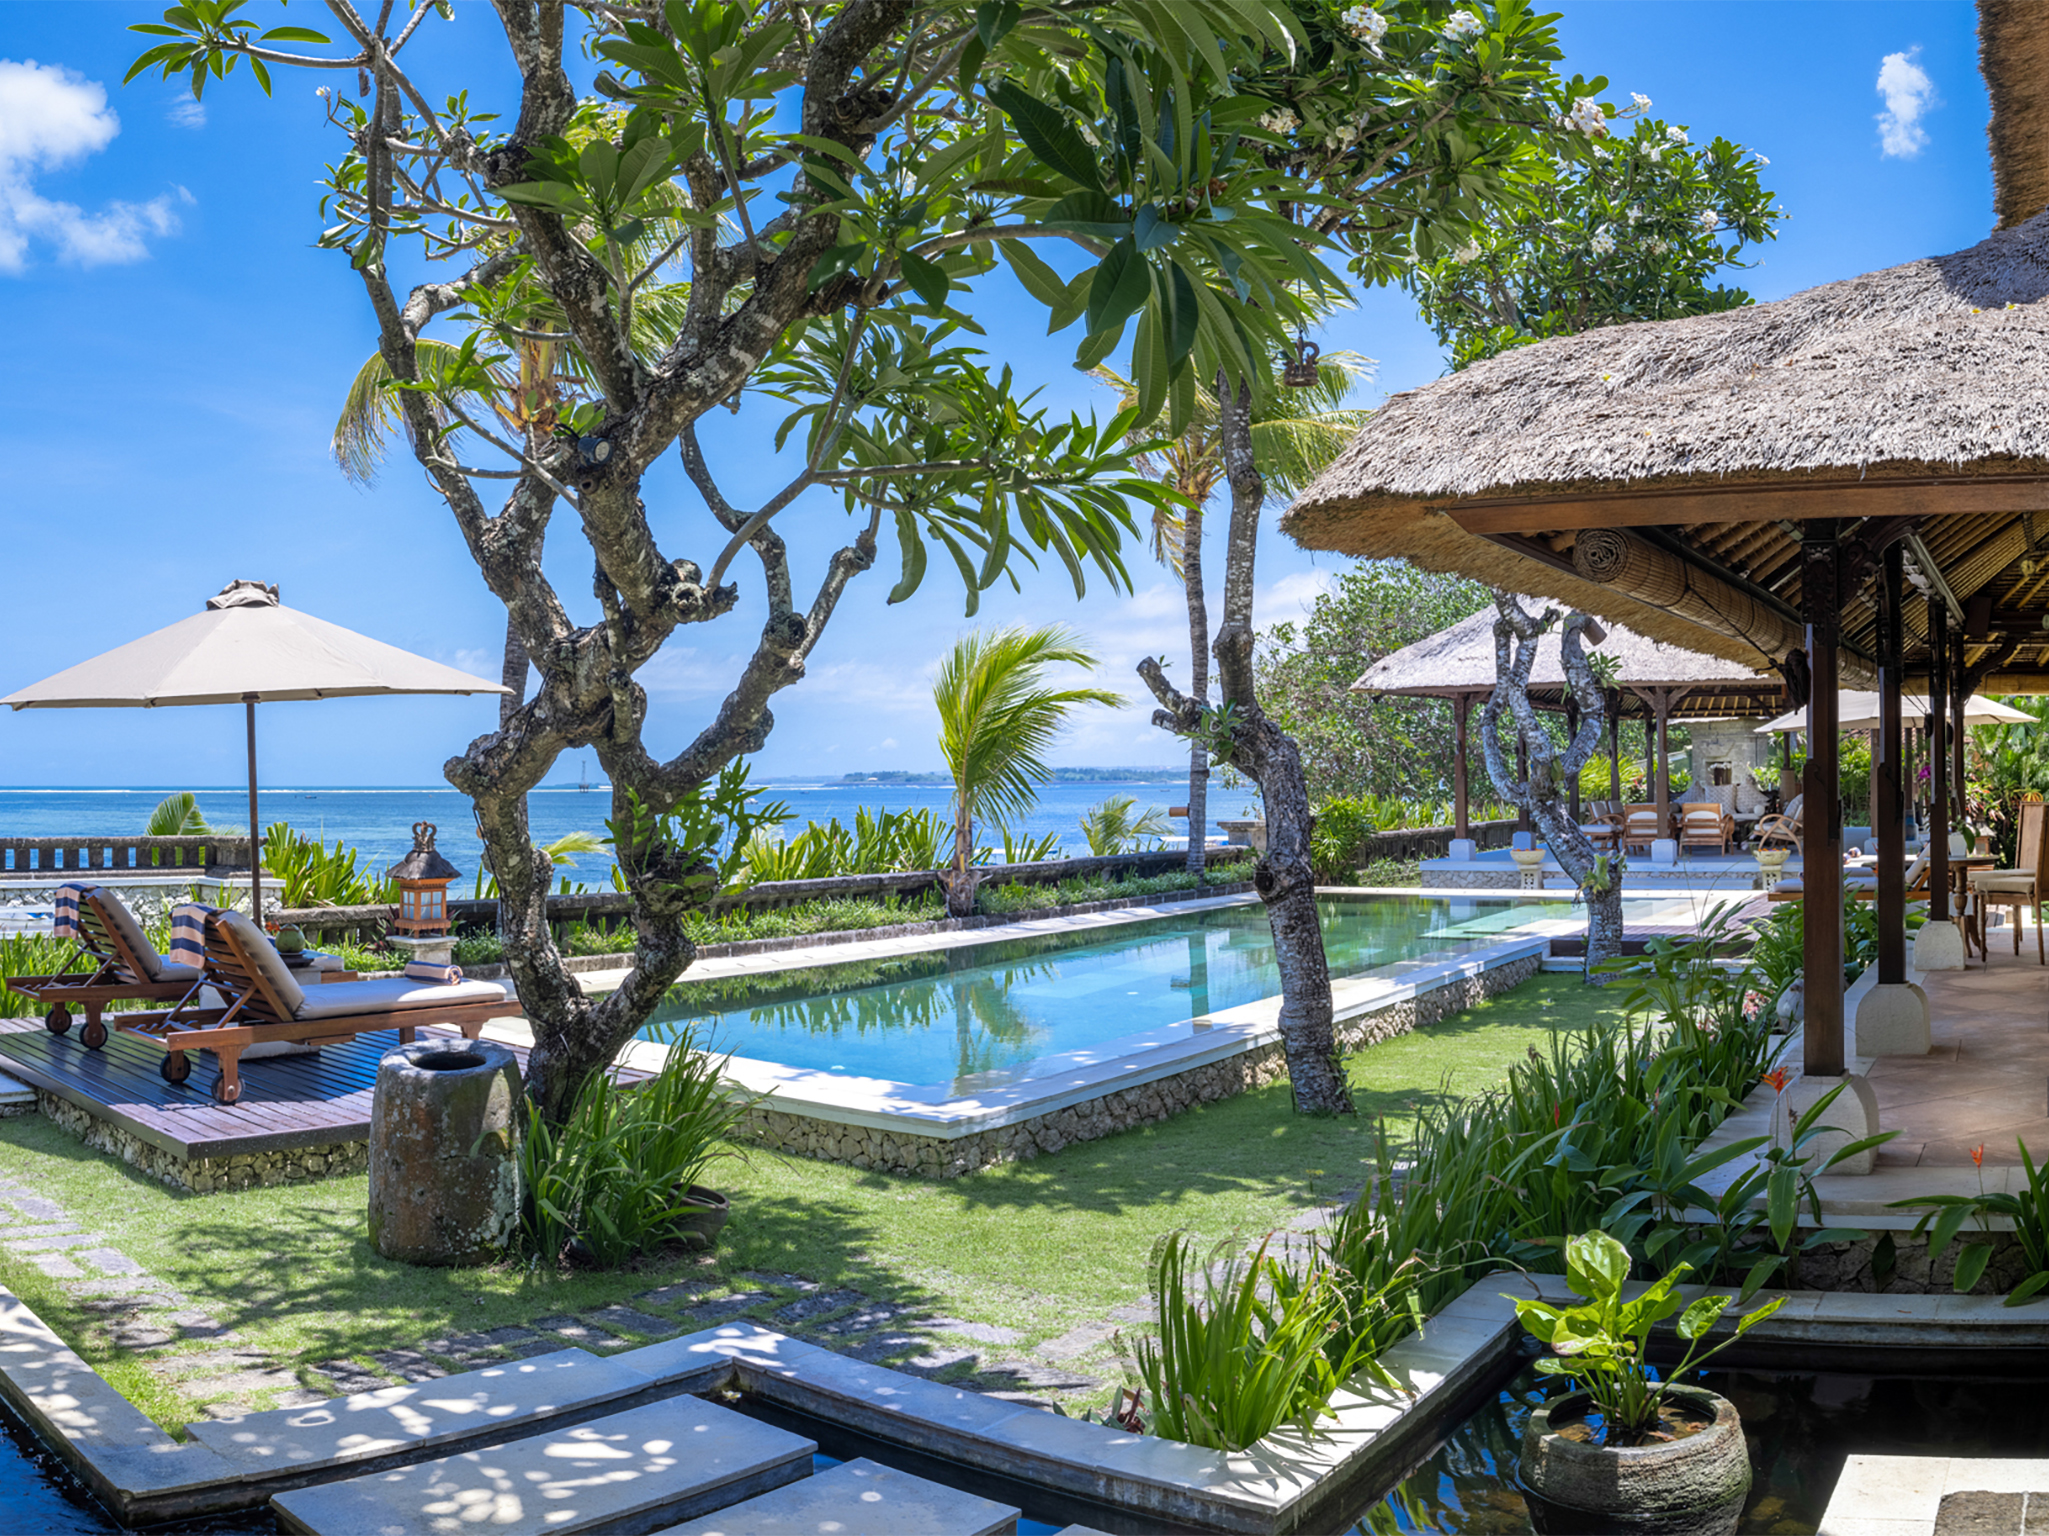 Villa Cemara - Sea view and pool - Villa Cemara, Sanur, Bali